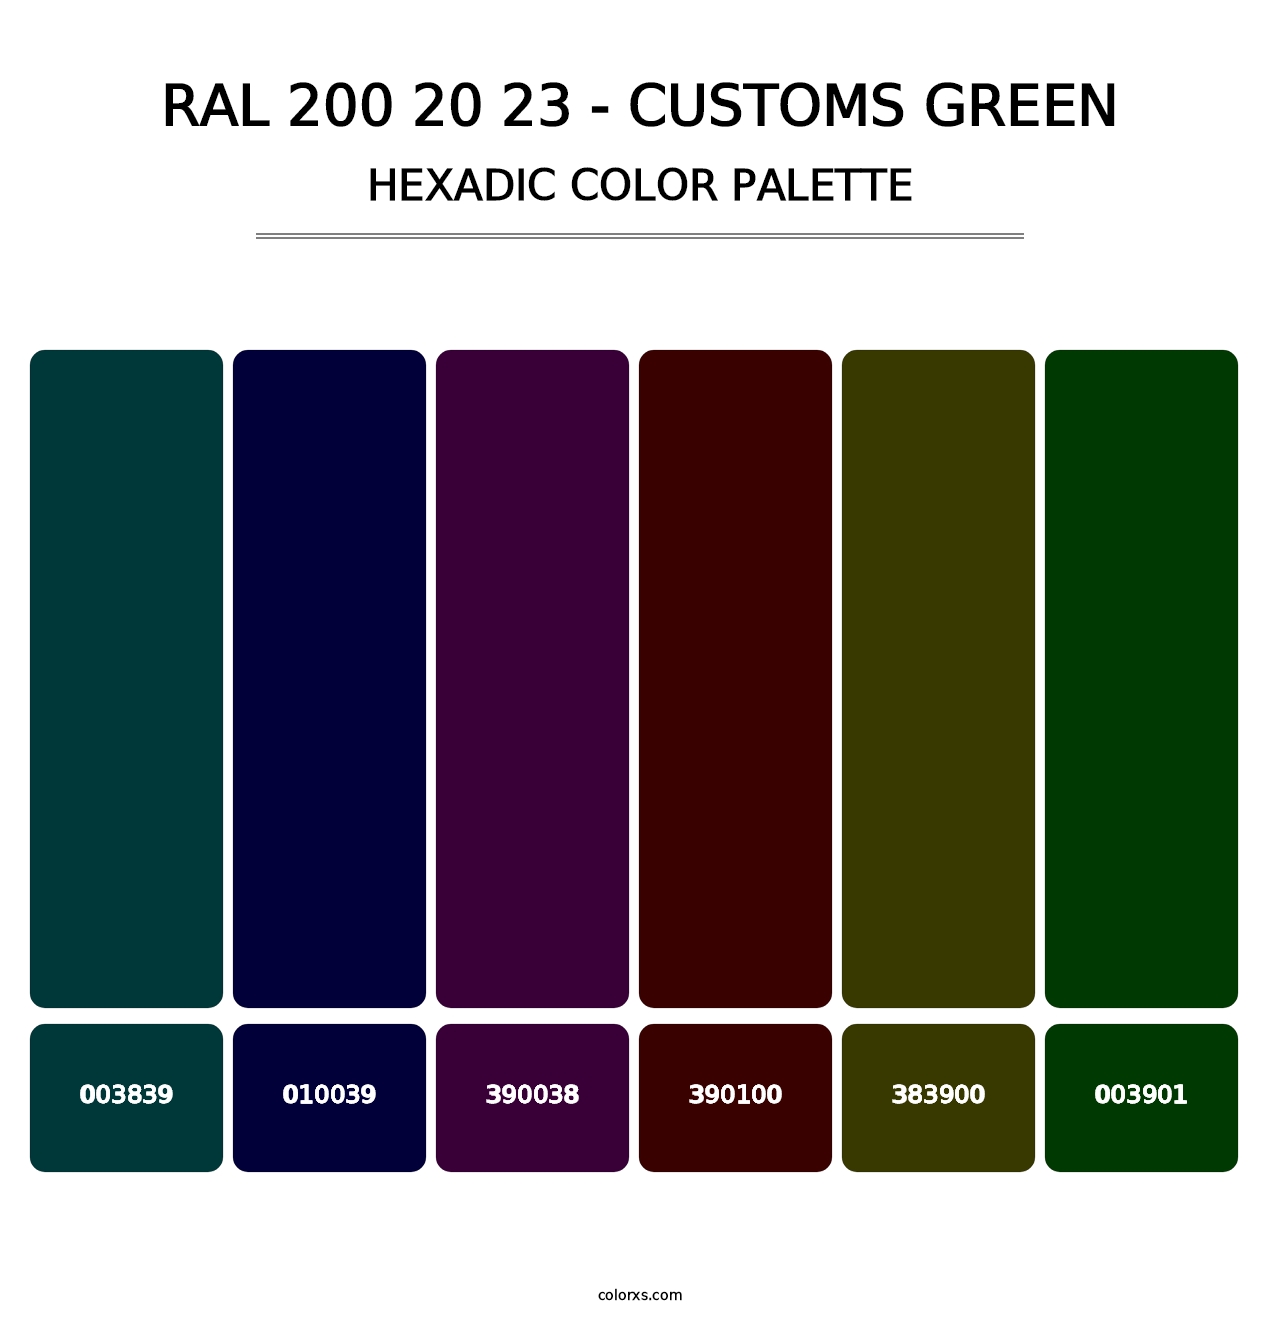 RAL 200 20 23 - Customs Green - Hexadic Color Palette